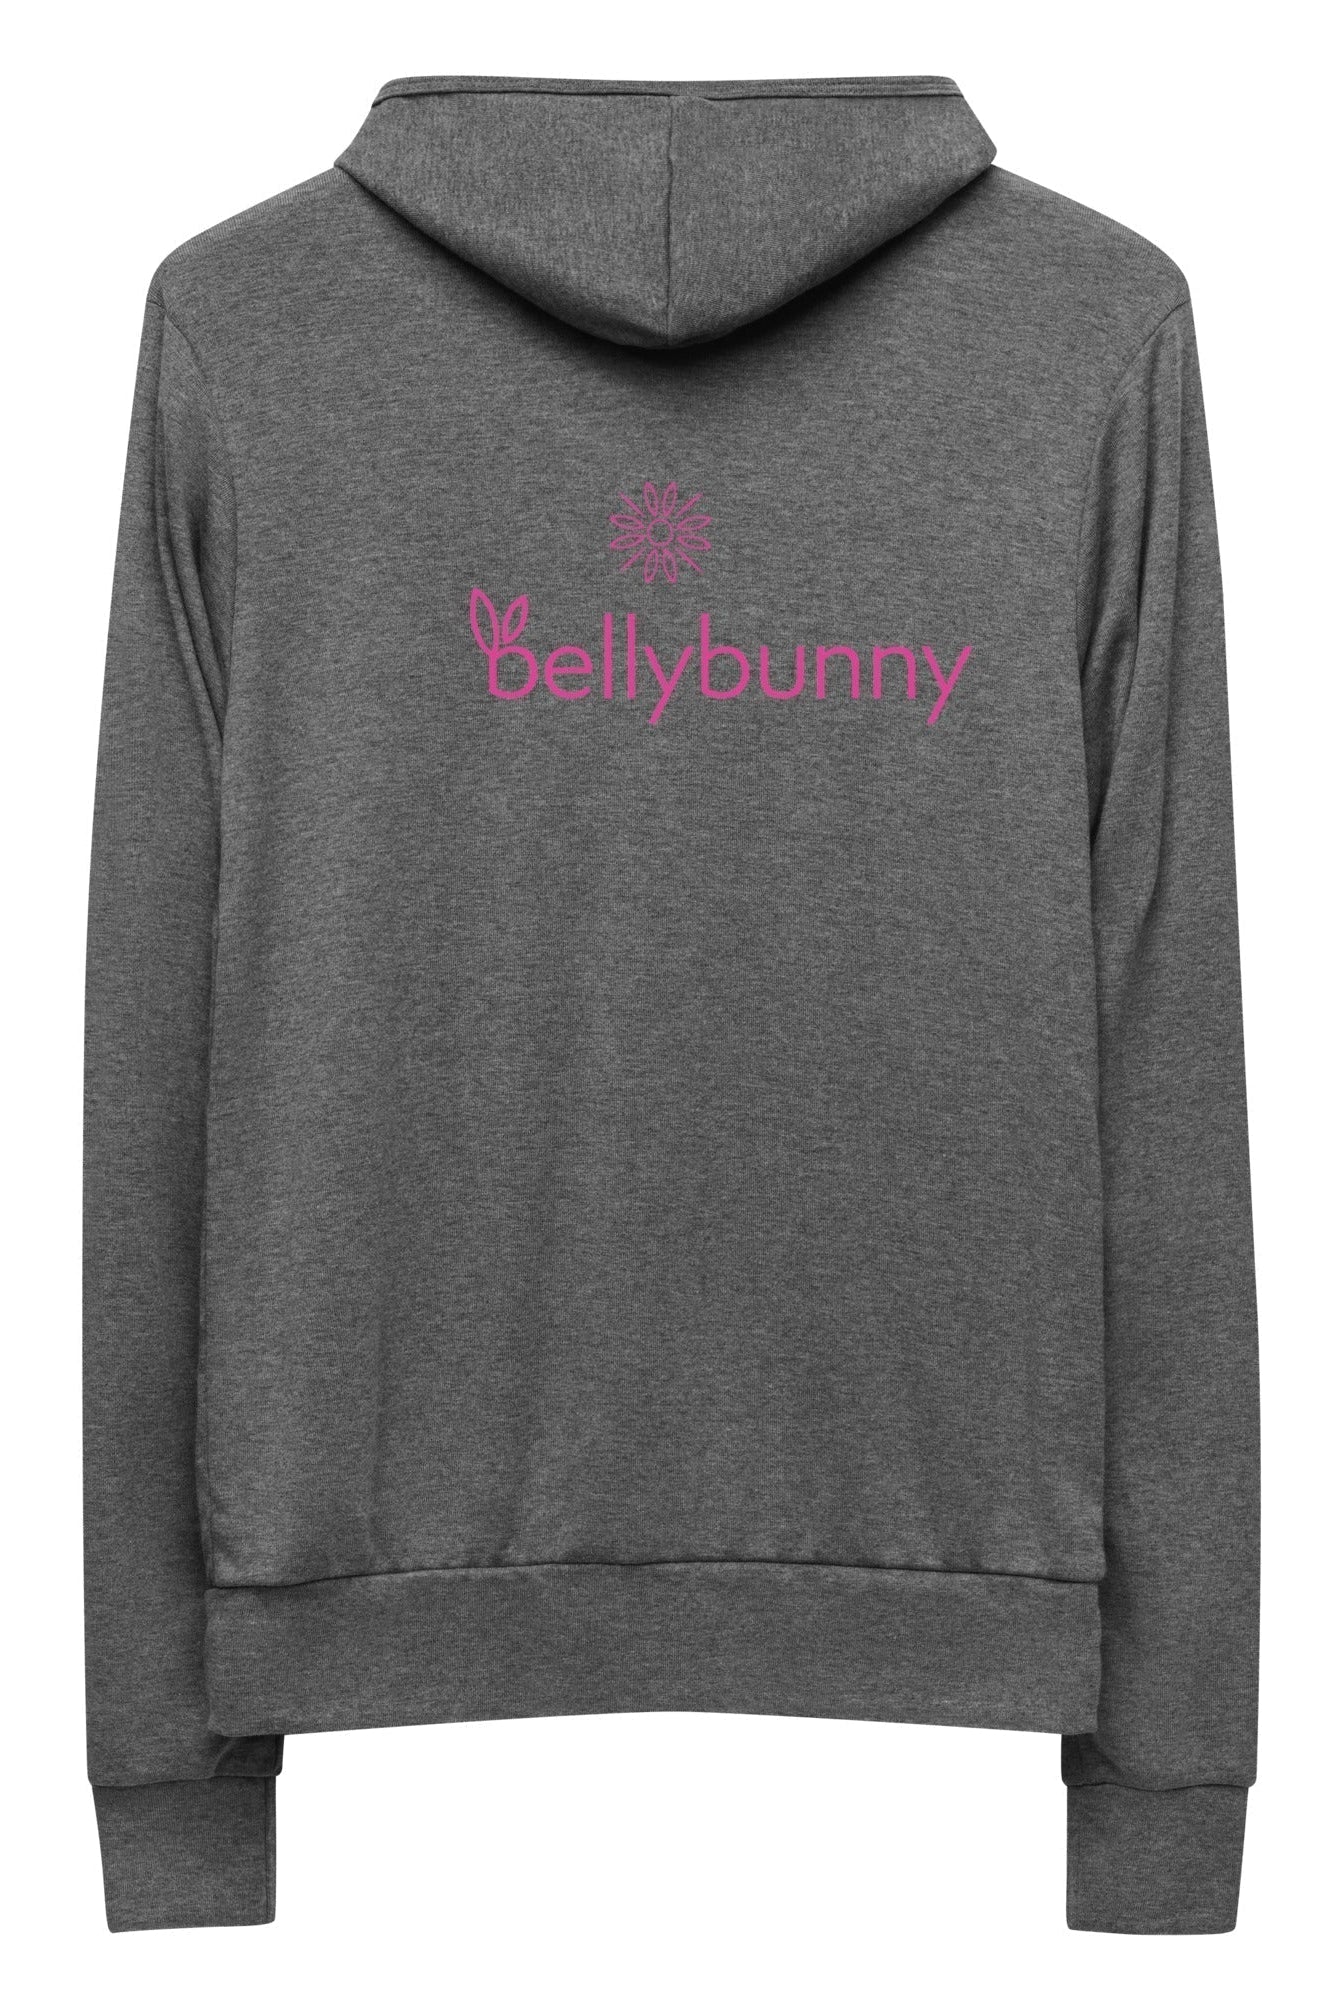 Bellybunny Women's Zip-Up Hoodie-Grey Triblend with pink logo